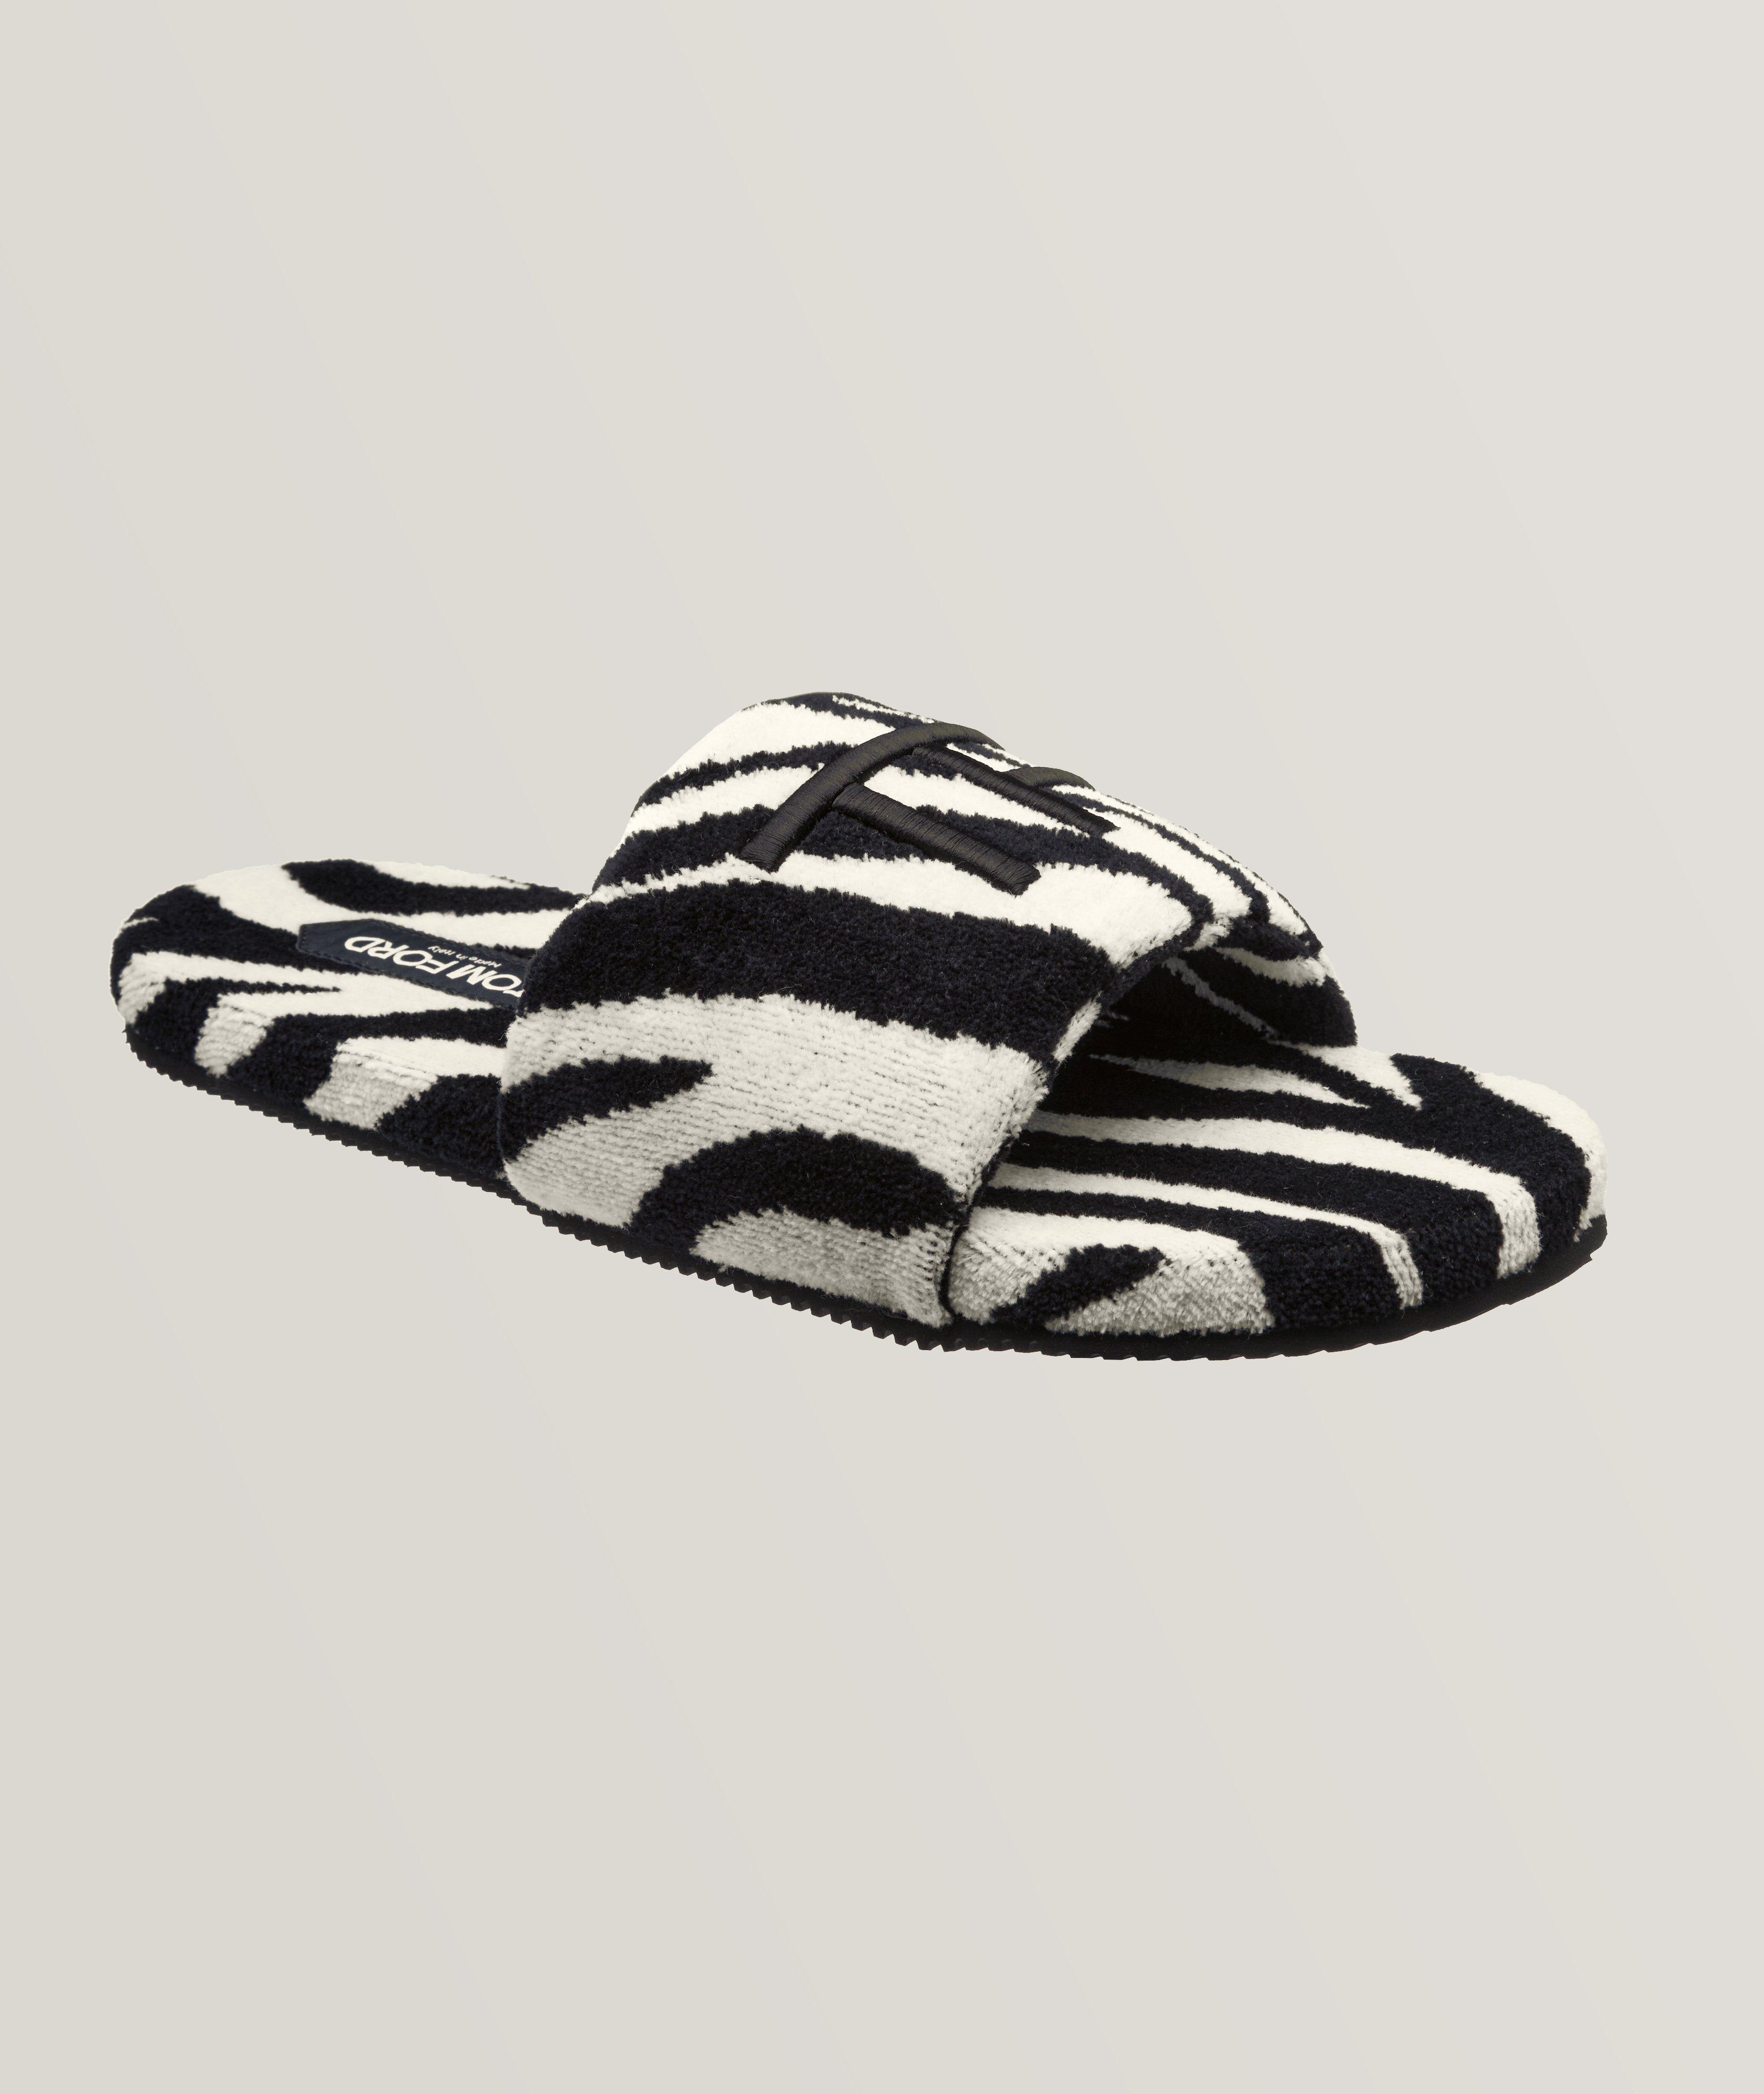 Harrison Jacquard Zebra Print Slippers image 0